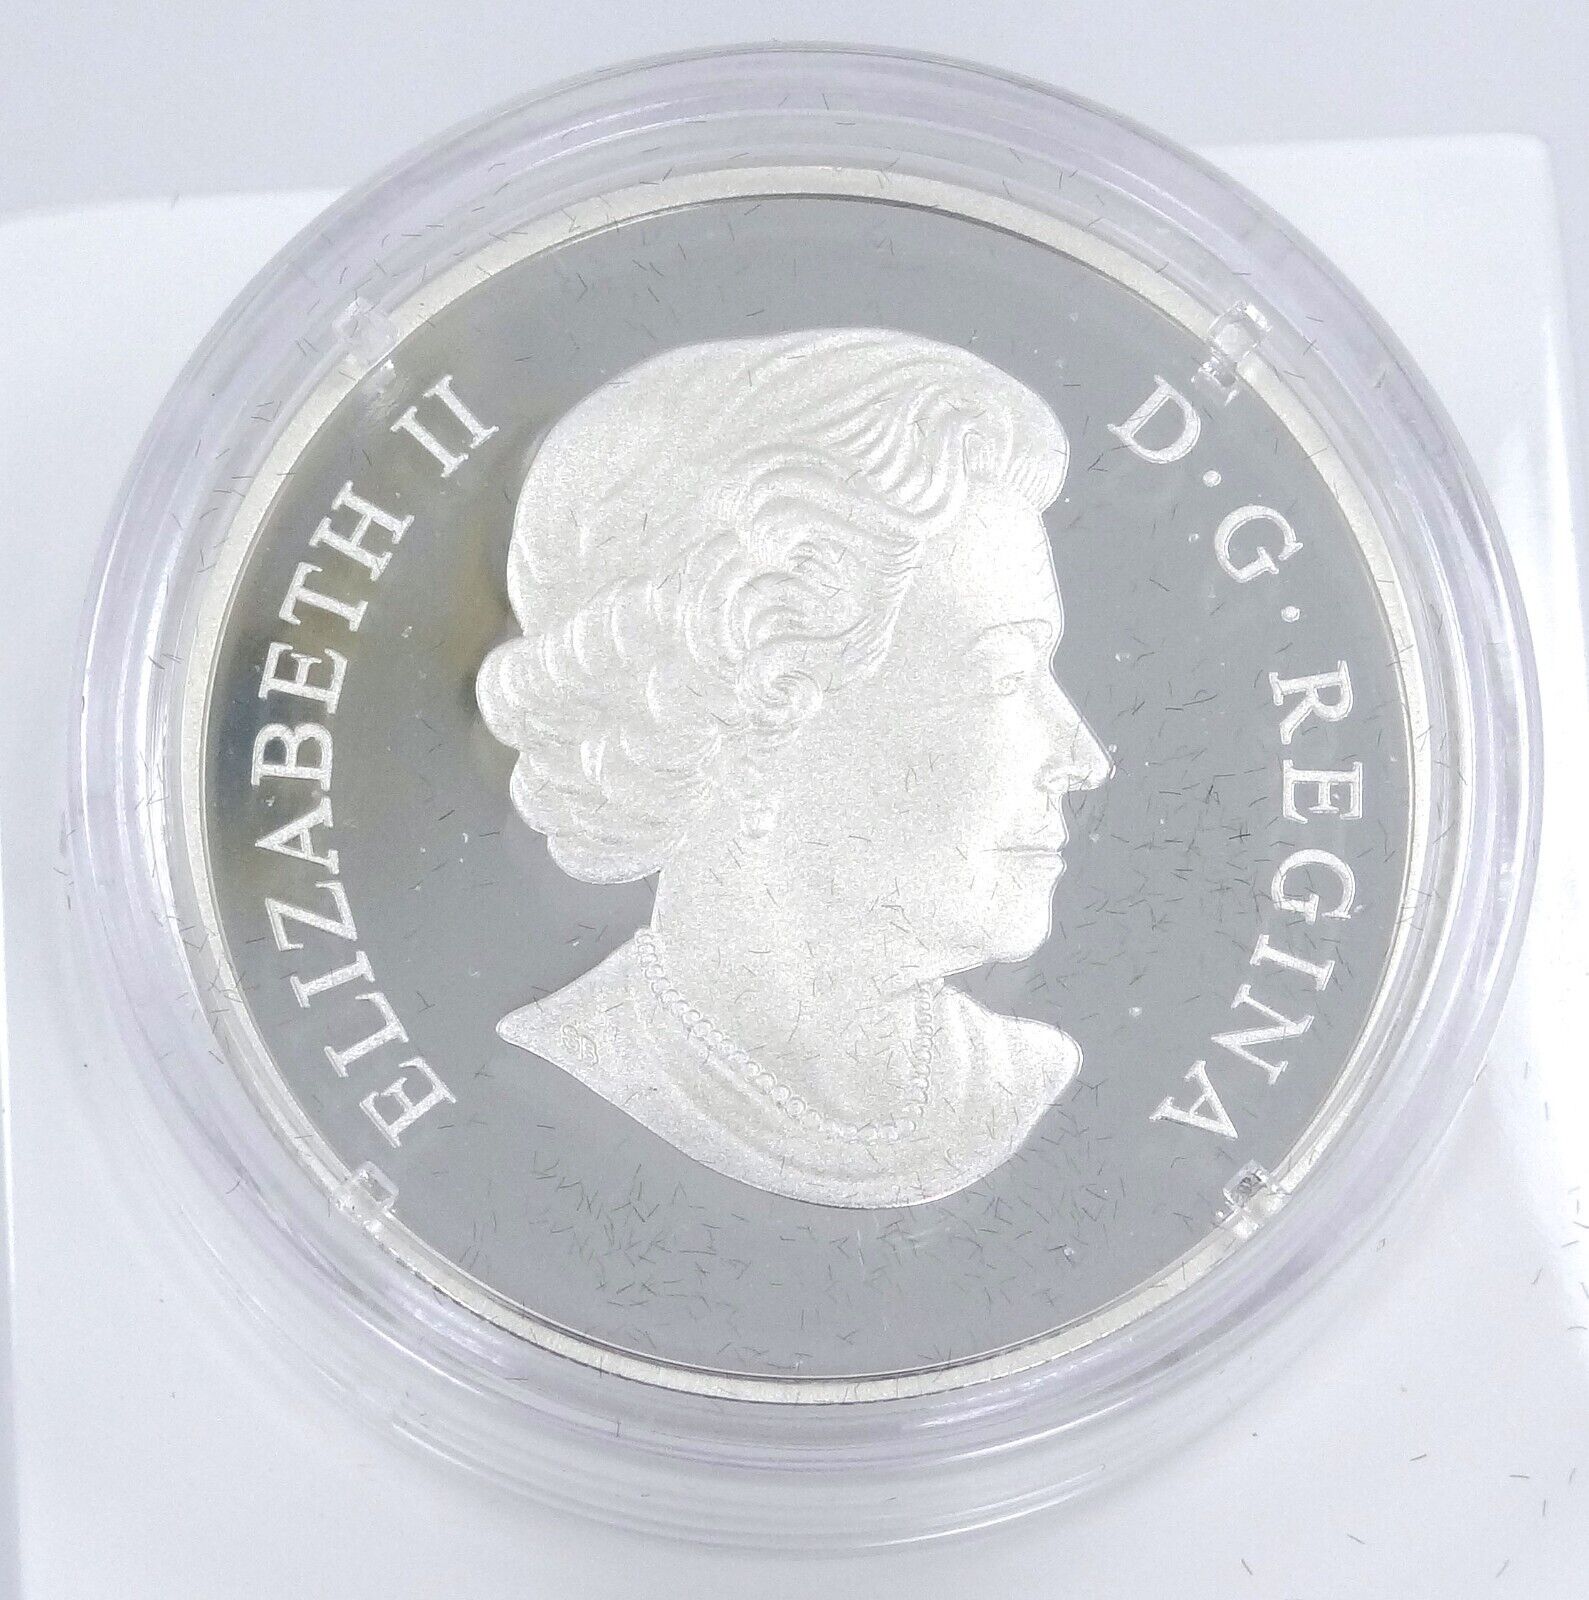 31.39g Silver Coin 2017 Canada $20 Murrini Glass Proof Under the Sea - Seahorse-classypw.com-8